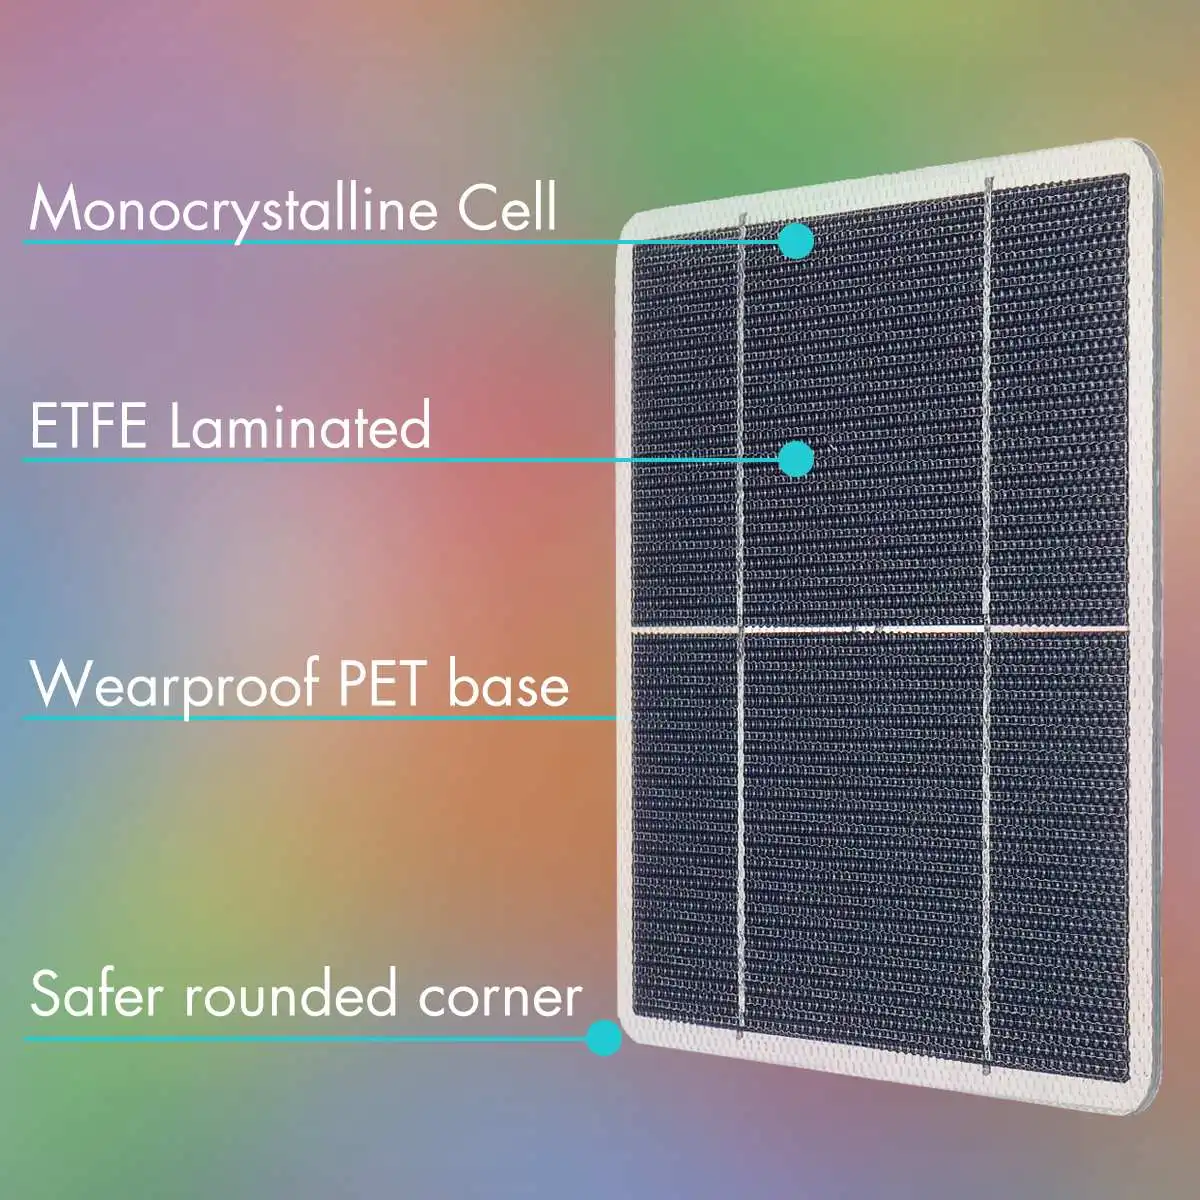 LEORY 5W 170x170mm DIY Monocrystalline Solar Panel ETFE laminated Mono Silicon Cells Photovoltaic Grade A High Efficiency